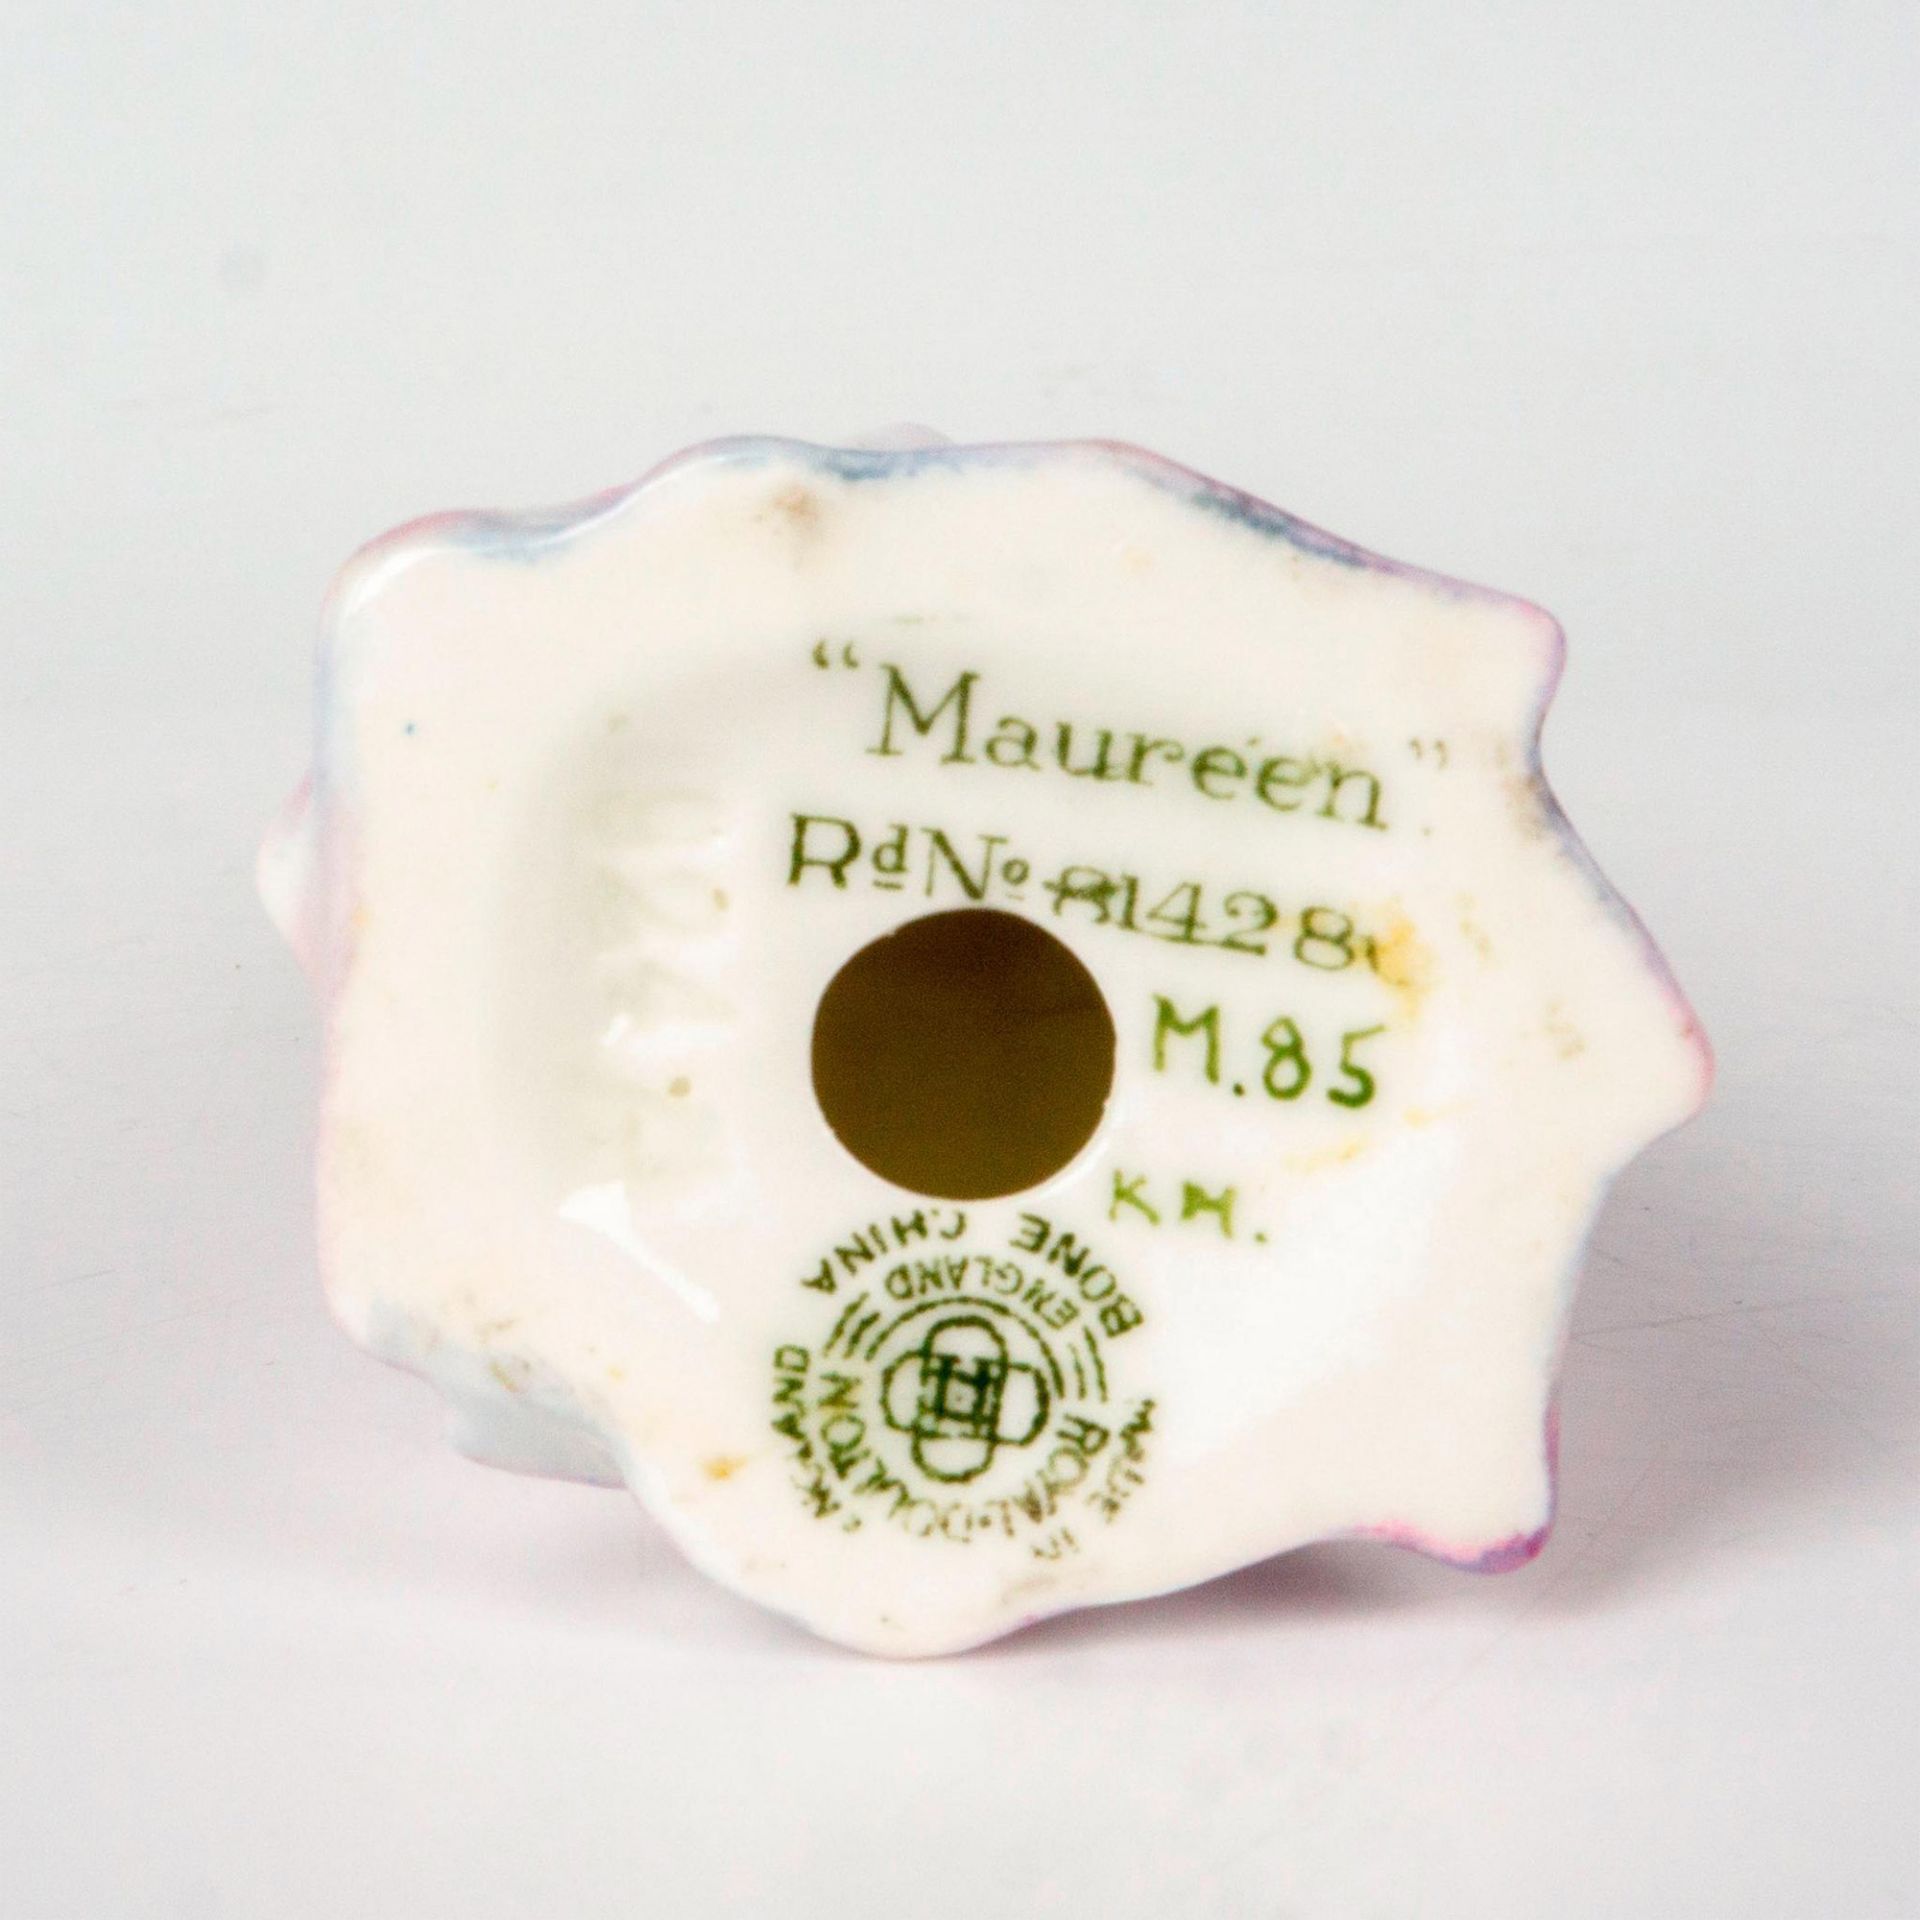 Maureen - M85 - Royal Doulton Figurine - Image 3 of 3